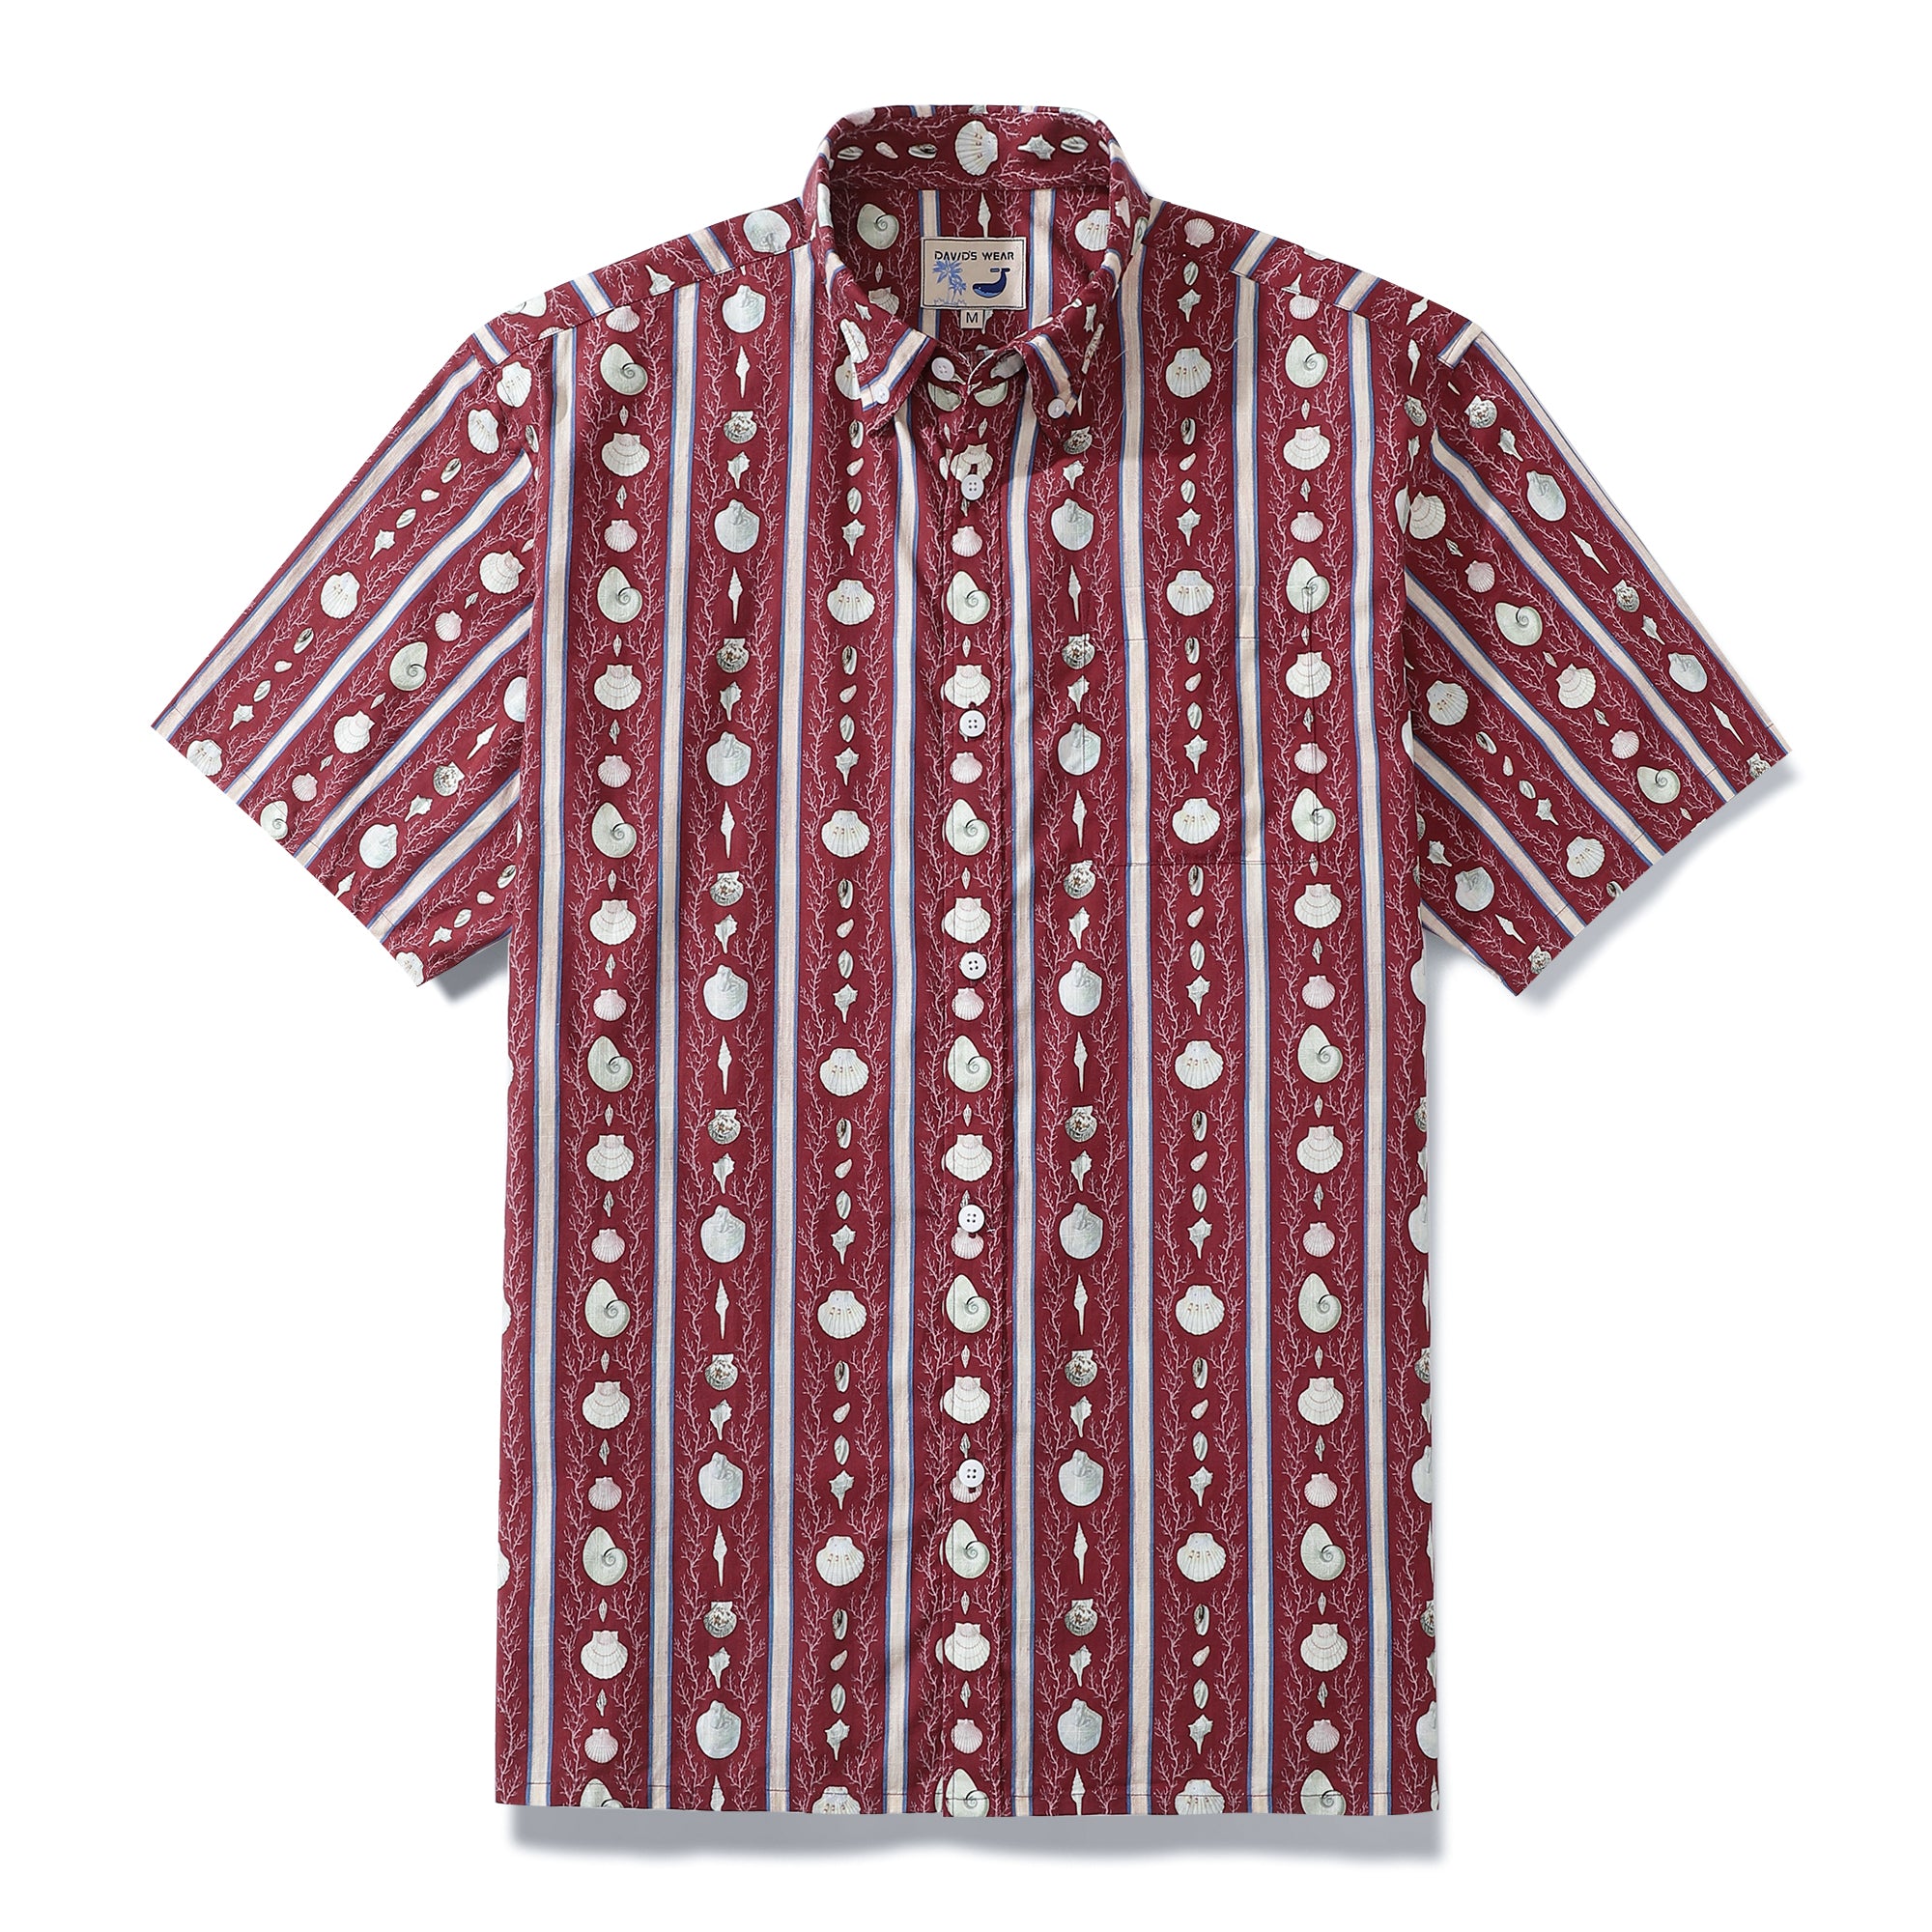 Hawaiian Shirt For Men Red Vintage Cotton Shirt Vertical Striped Shell Short Sleeve